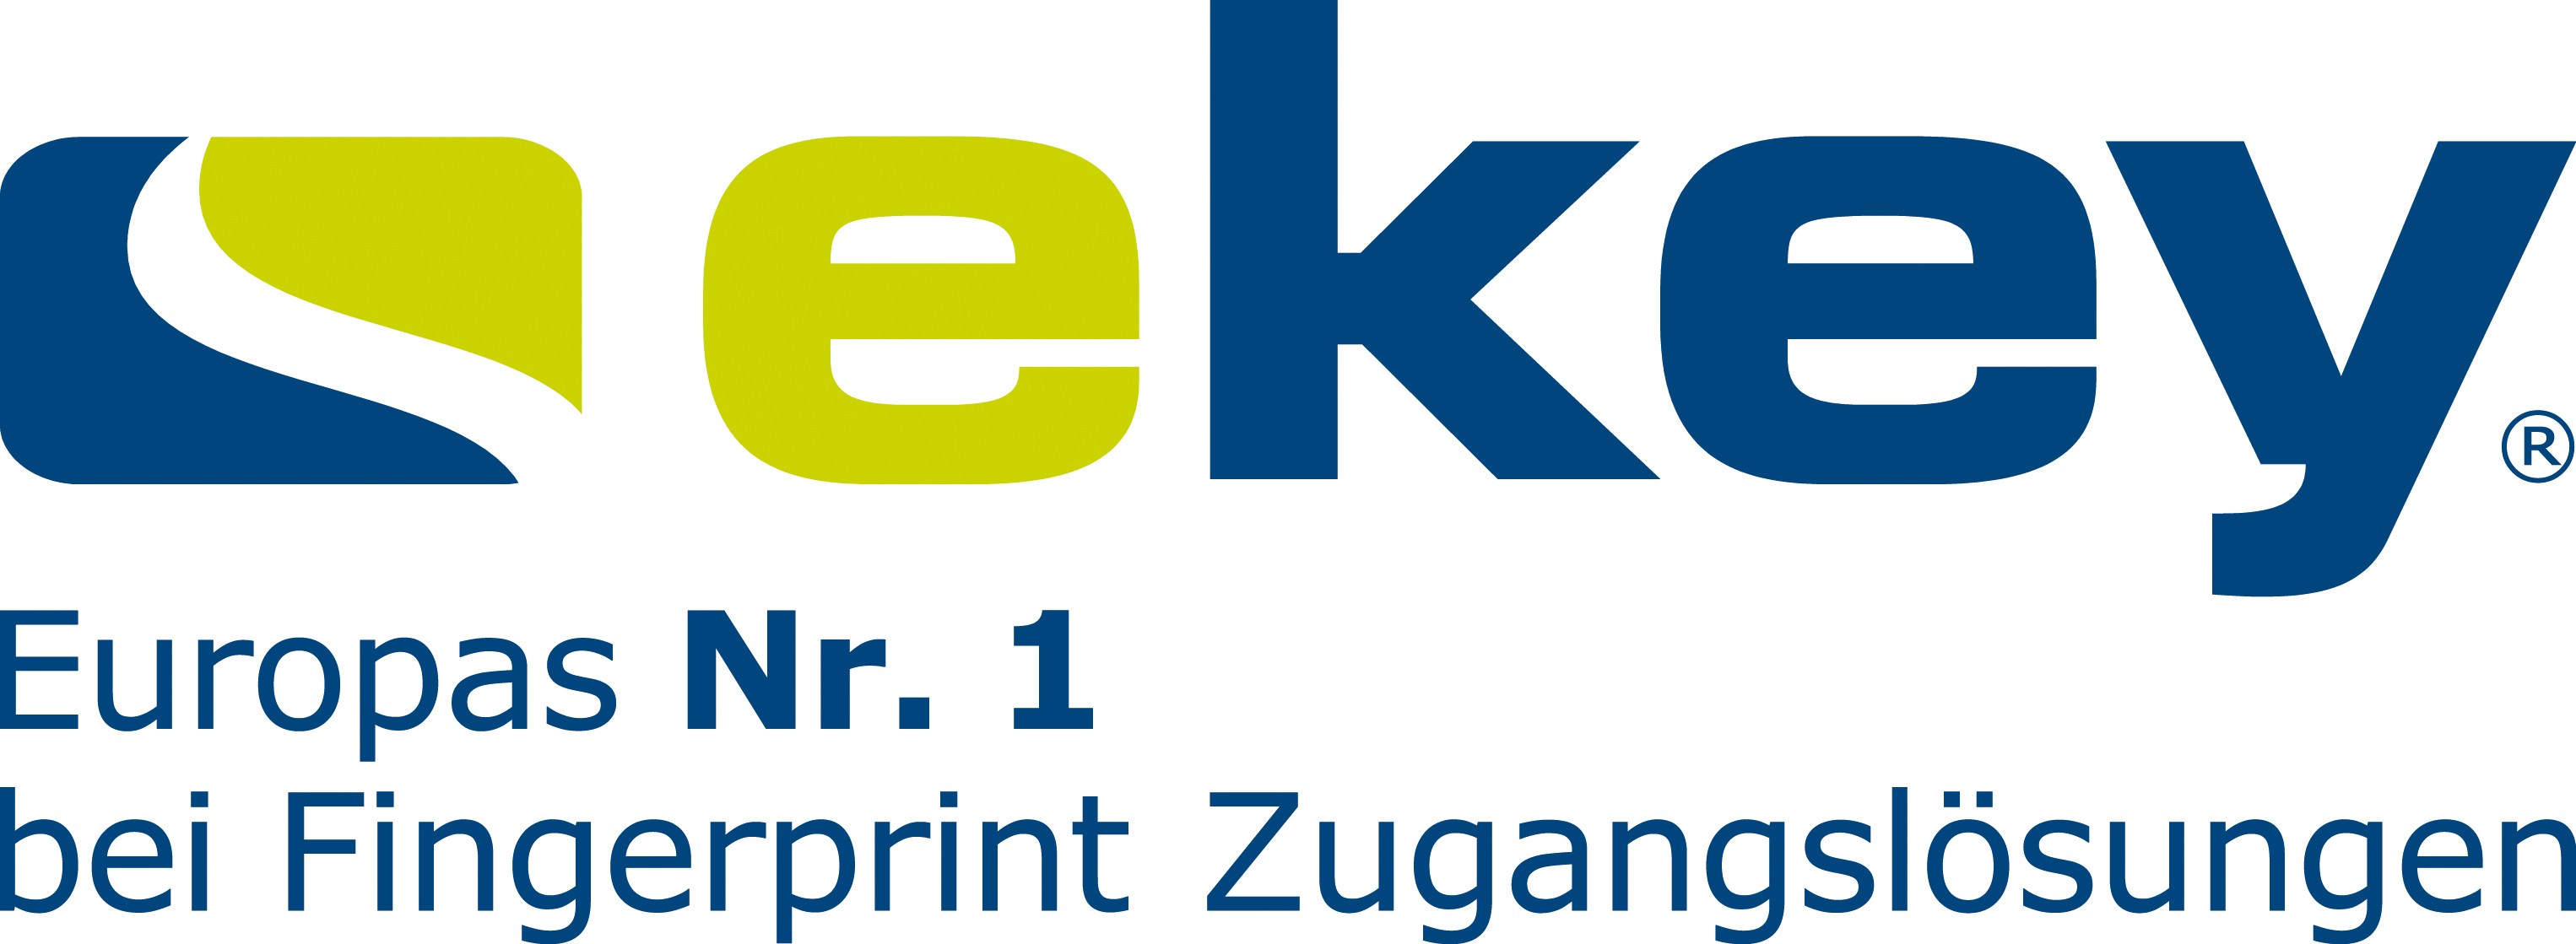 ekey_logo